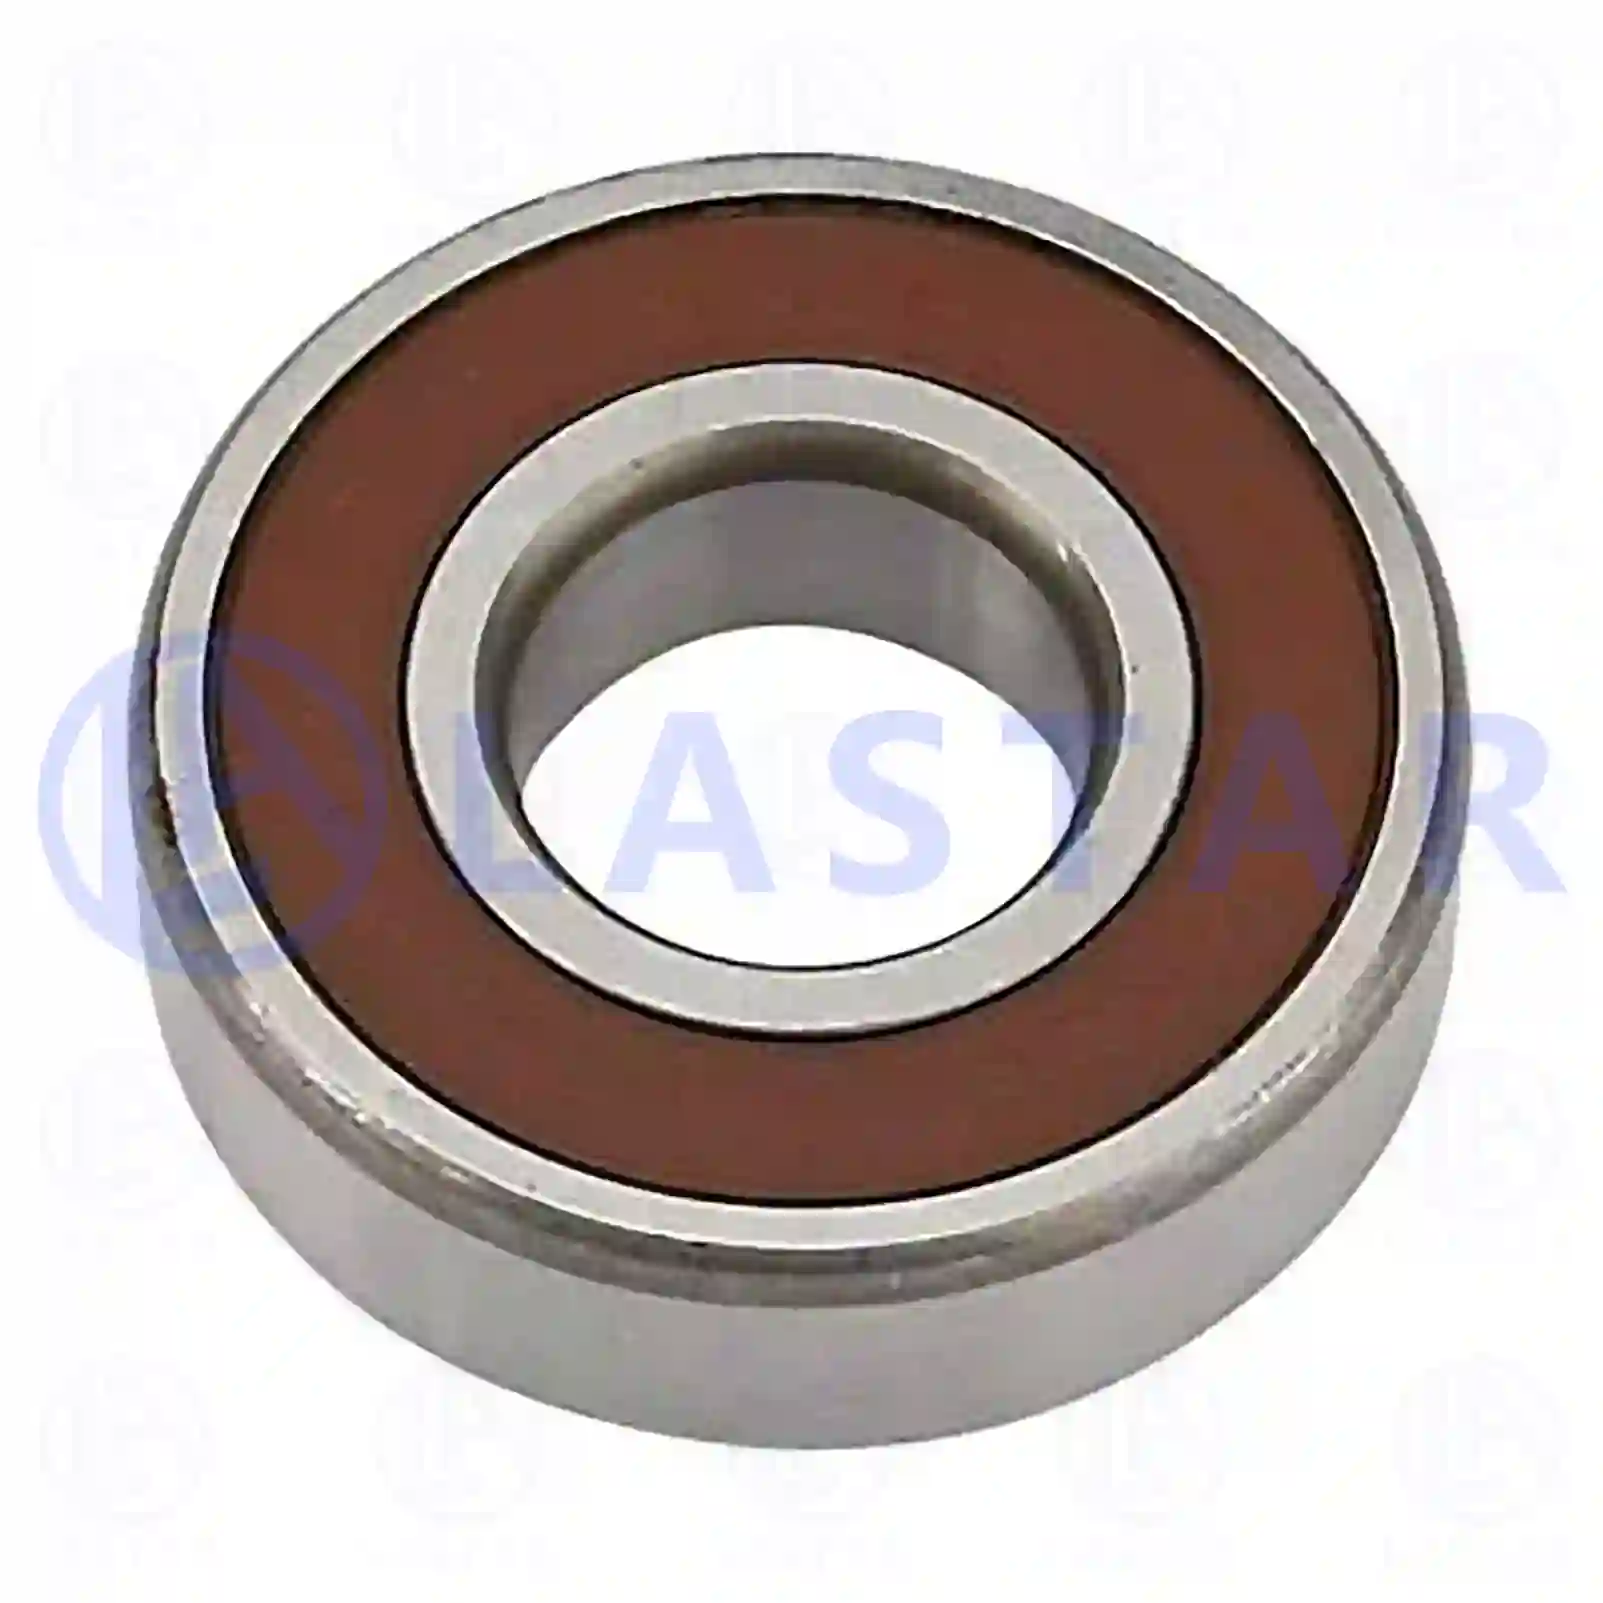 Clutch Housing Ball bearing, la no: 77723123 ,  oem no:1103031, 1363775, 348908 Lastar Spare Part | Truck Spare Parts, Auotomotive Spare Parts